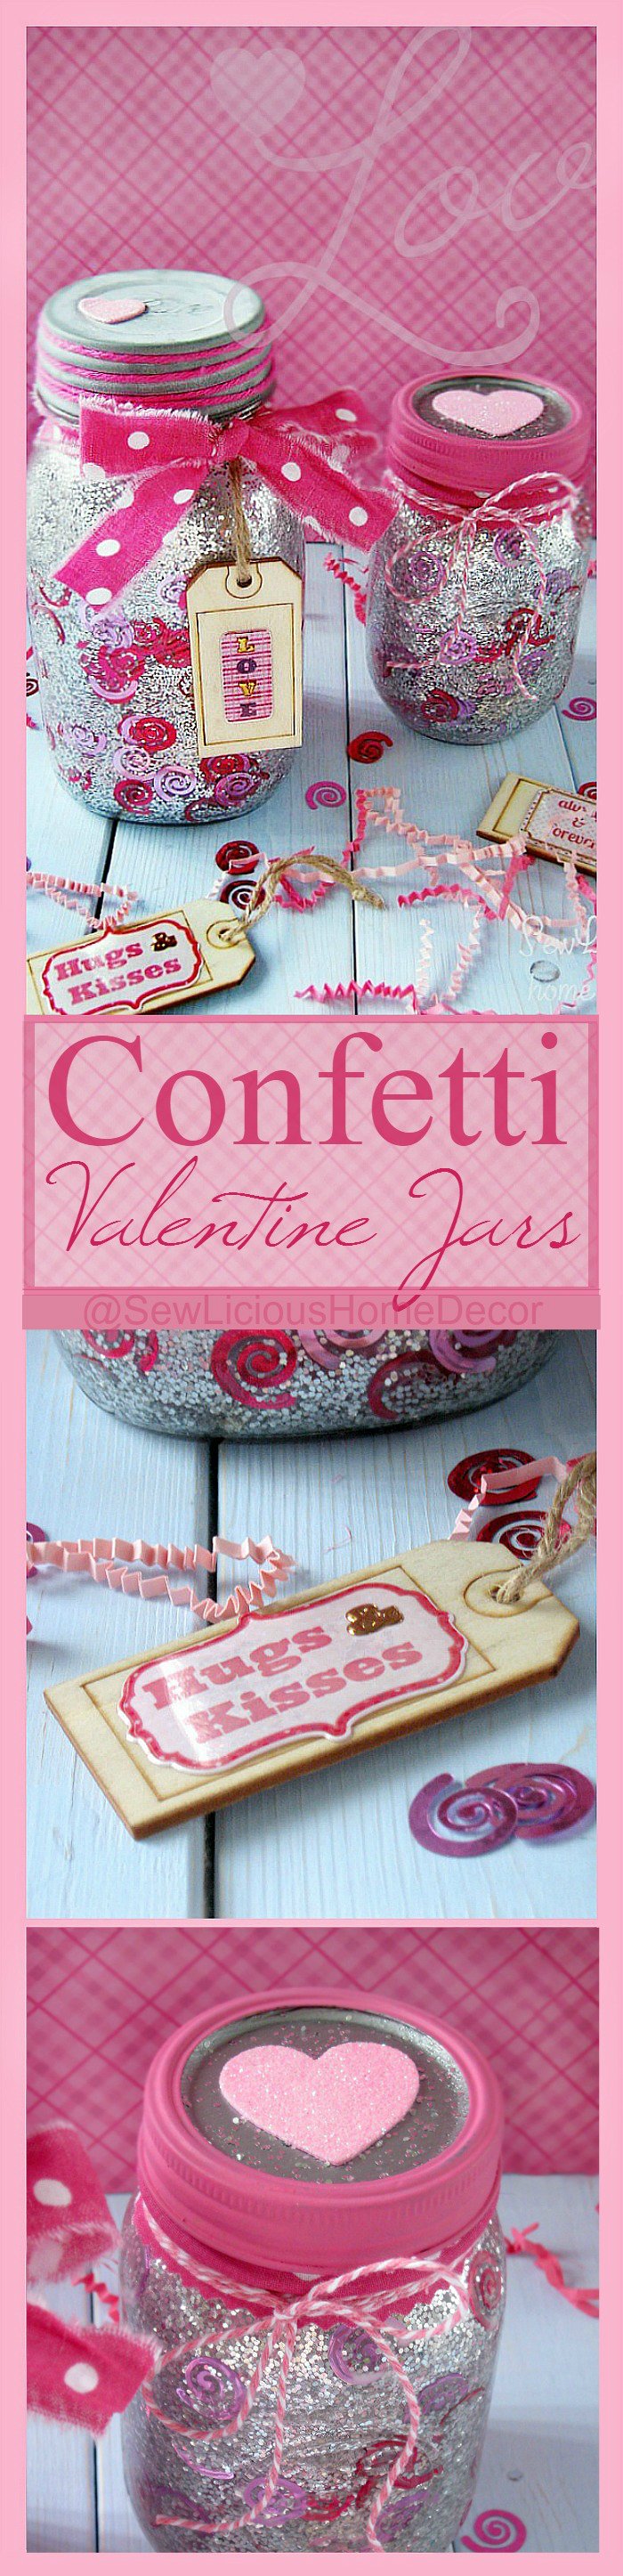 DIY Confetti Valentine Jar Pinterest